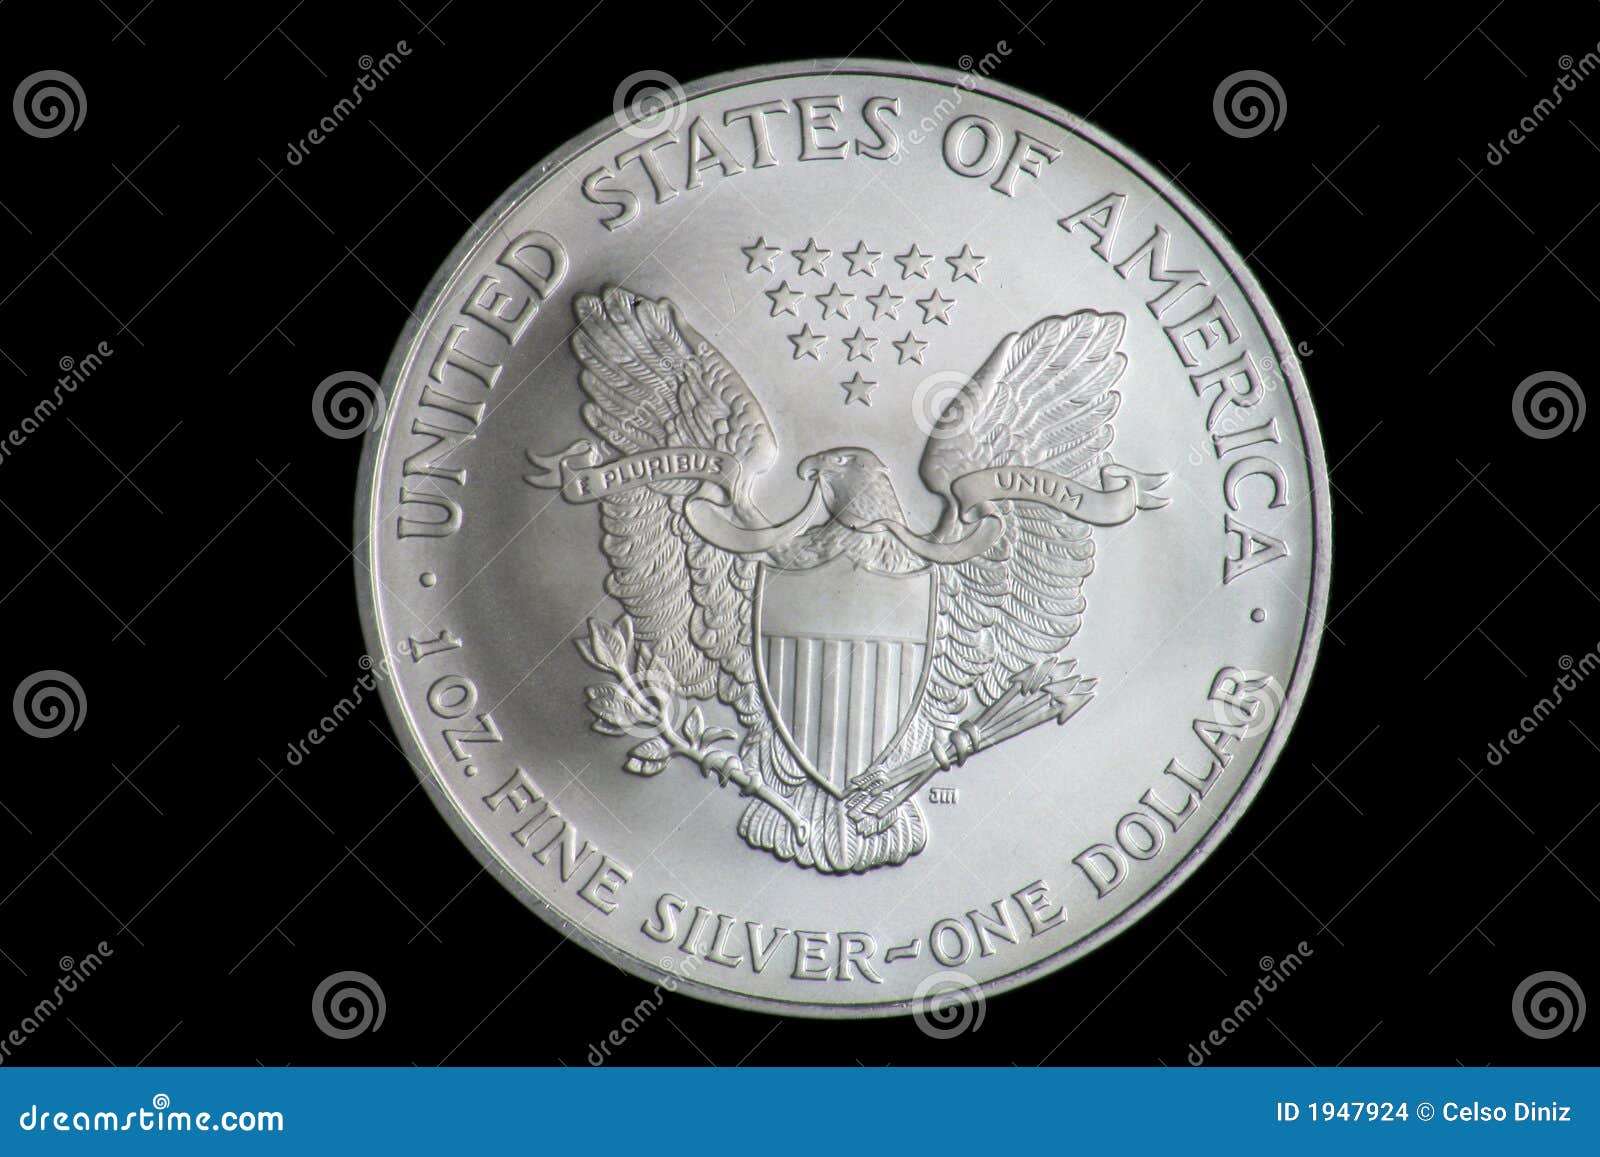 us one ounce fine silver dollar